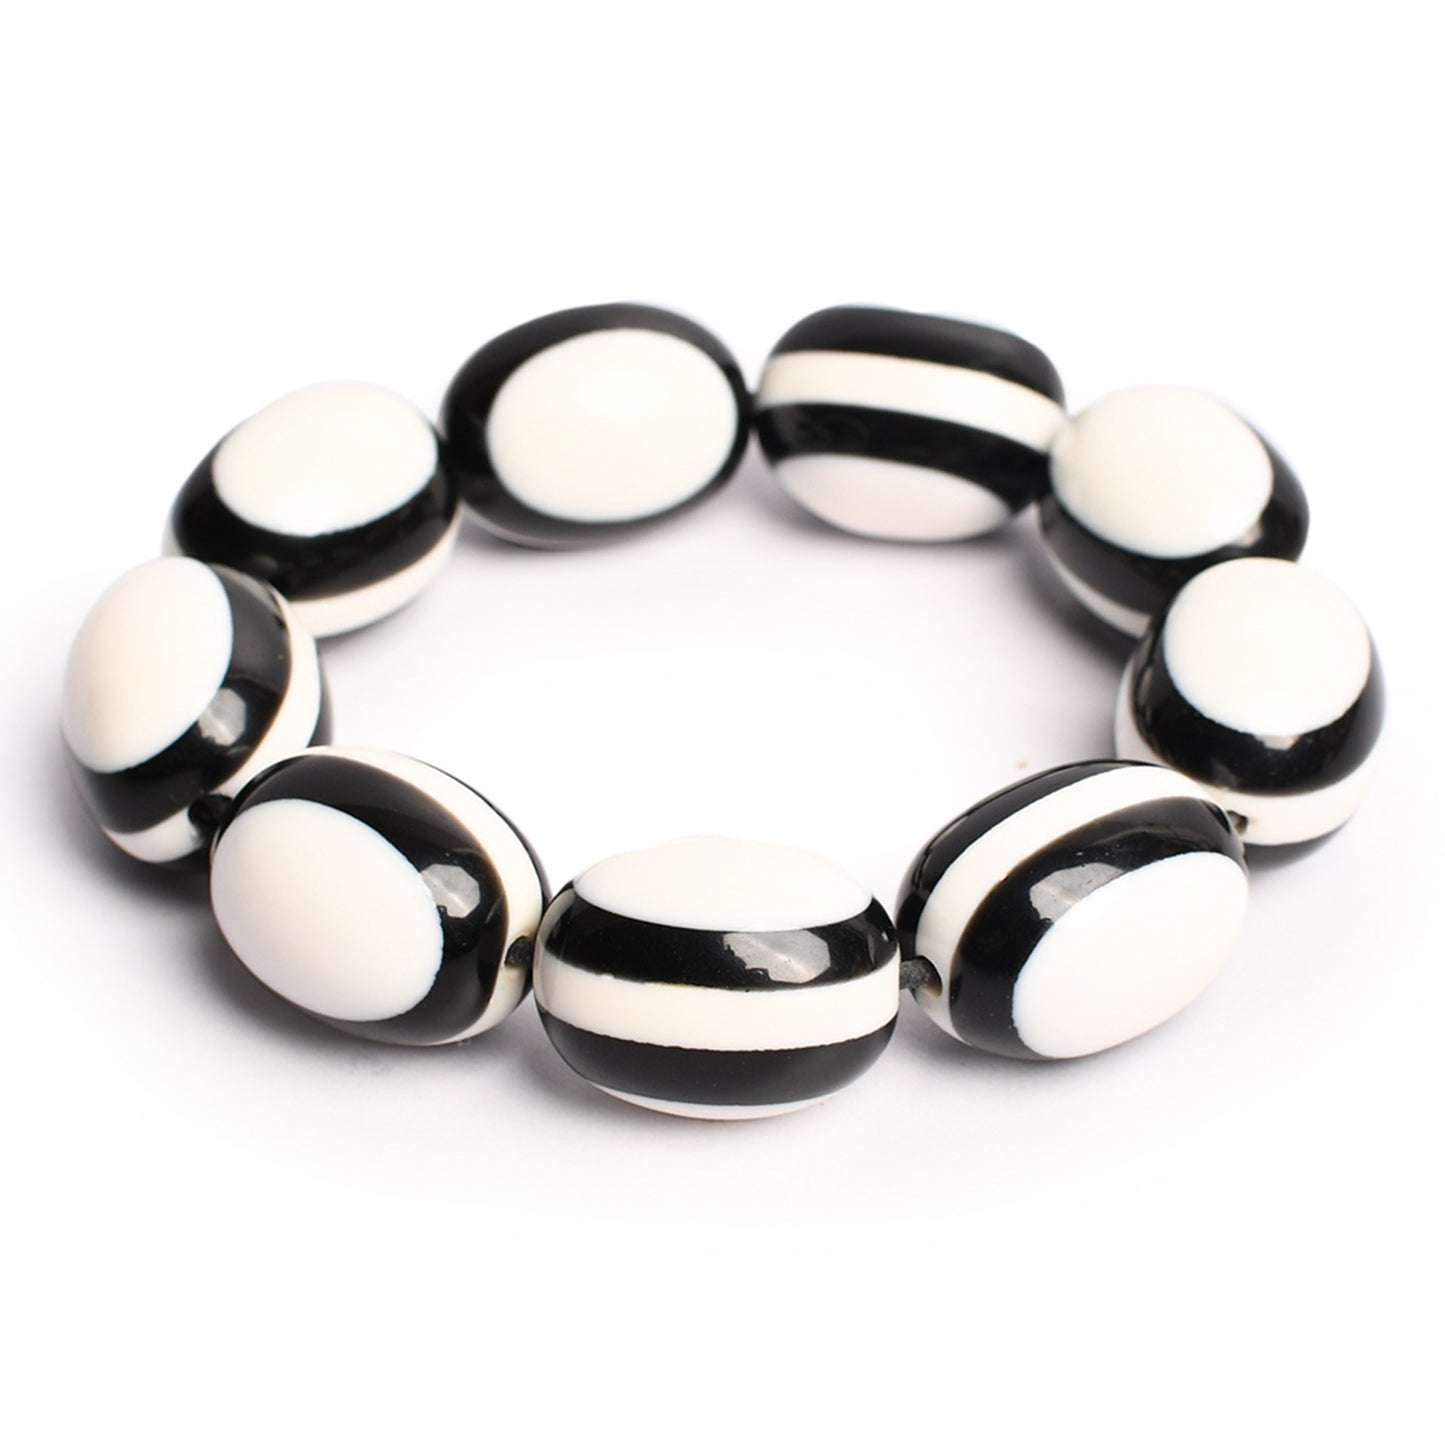 White & Black Stone Stretchable Bracelet by Bamboo Tree Jewels